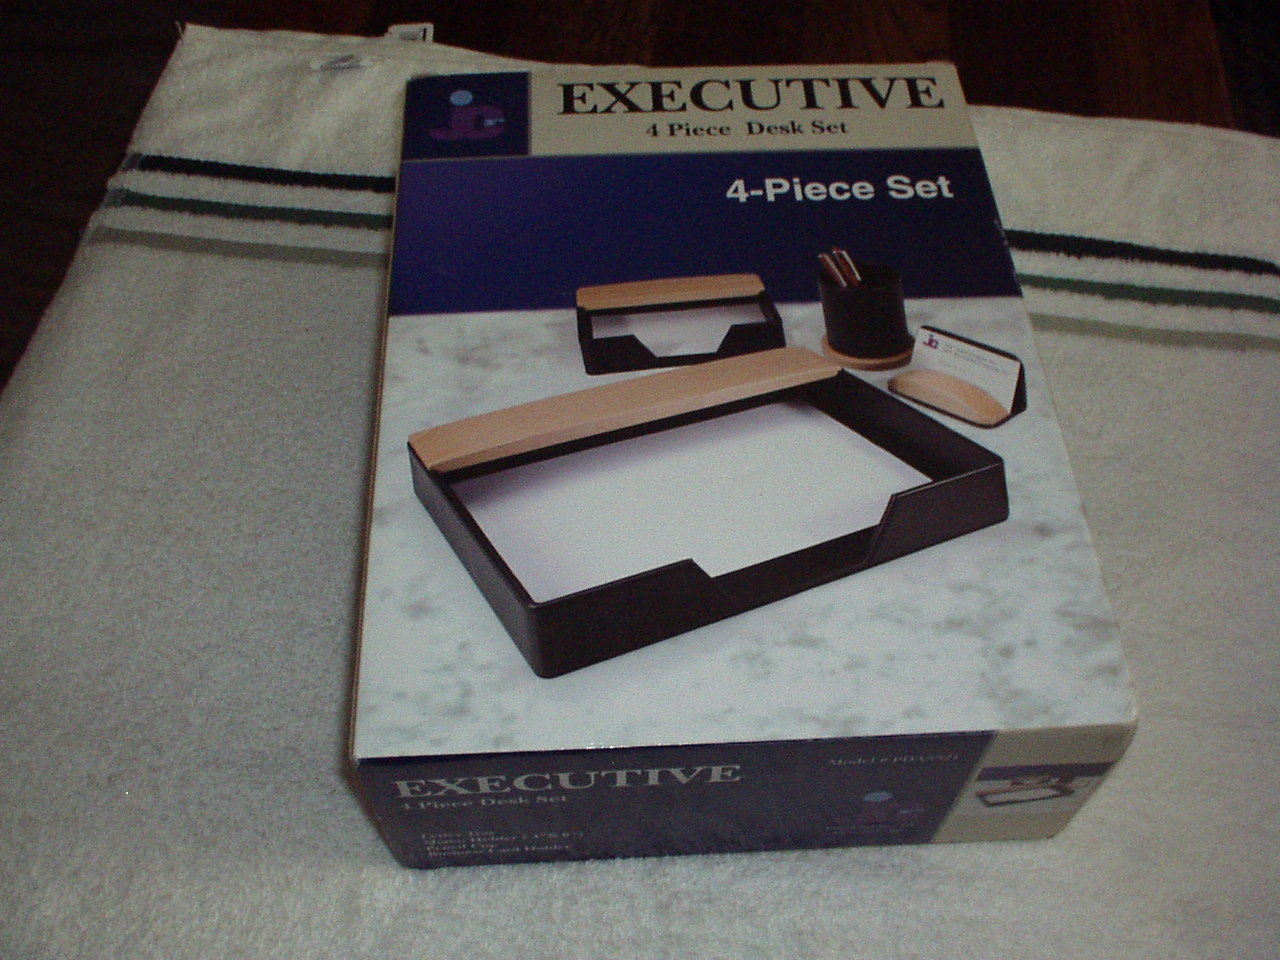 Executive 4-piece DESK Set JCF (Letter Tray/Memo Holder/Pencil Cup/Card Holder) - $19.99